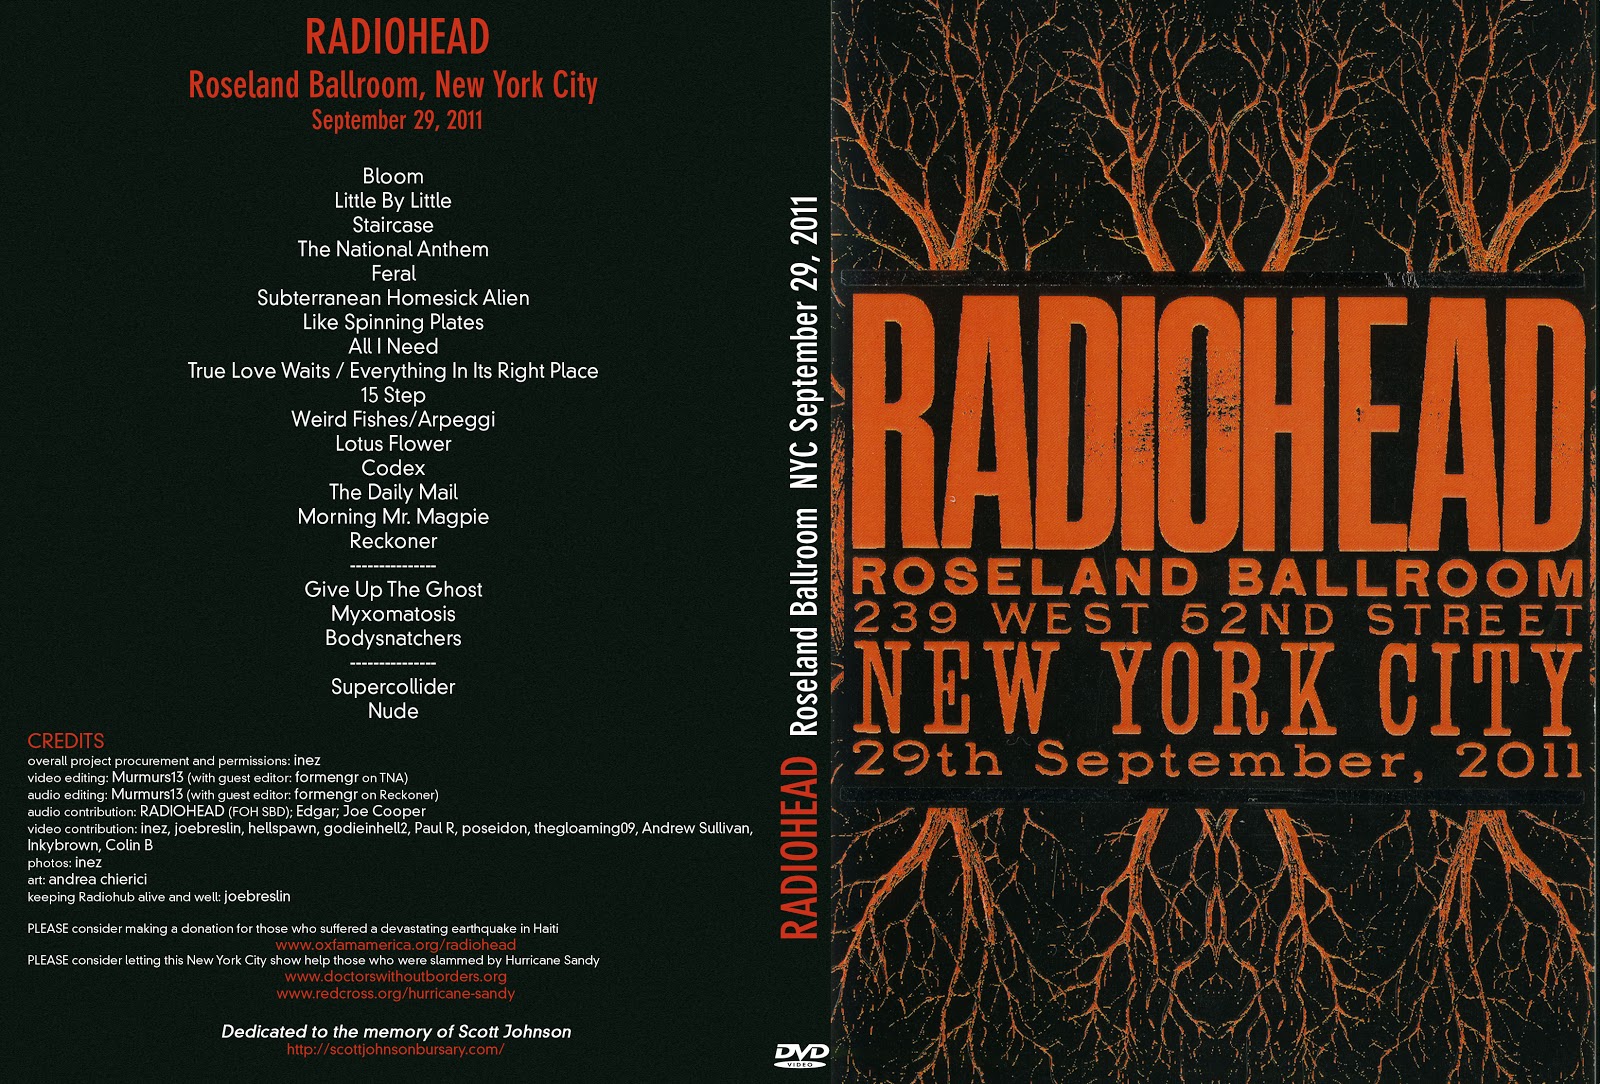 Radiohead - Scarica gratis il concerto Roseland Ballroom - artwork cover dvd